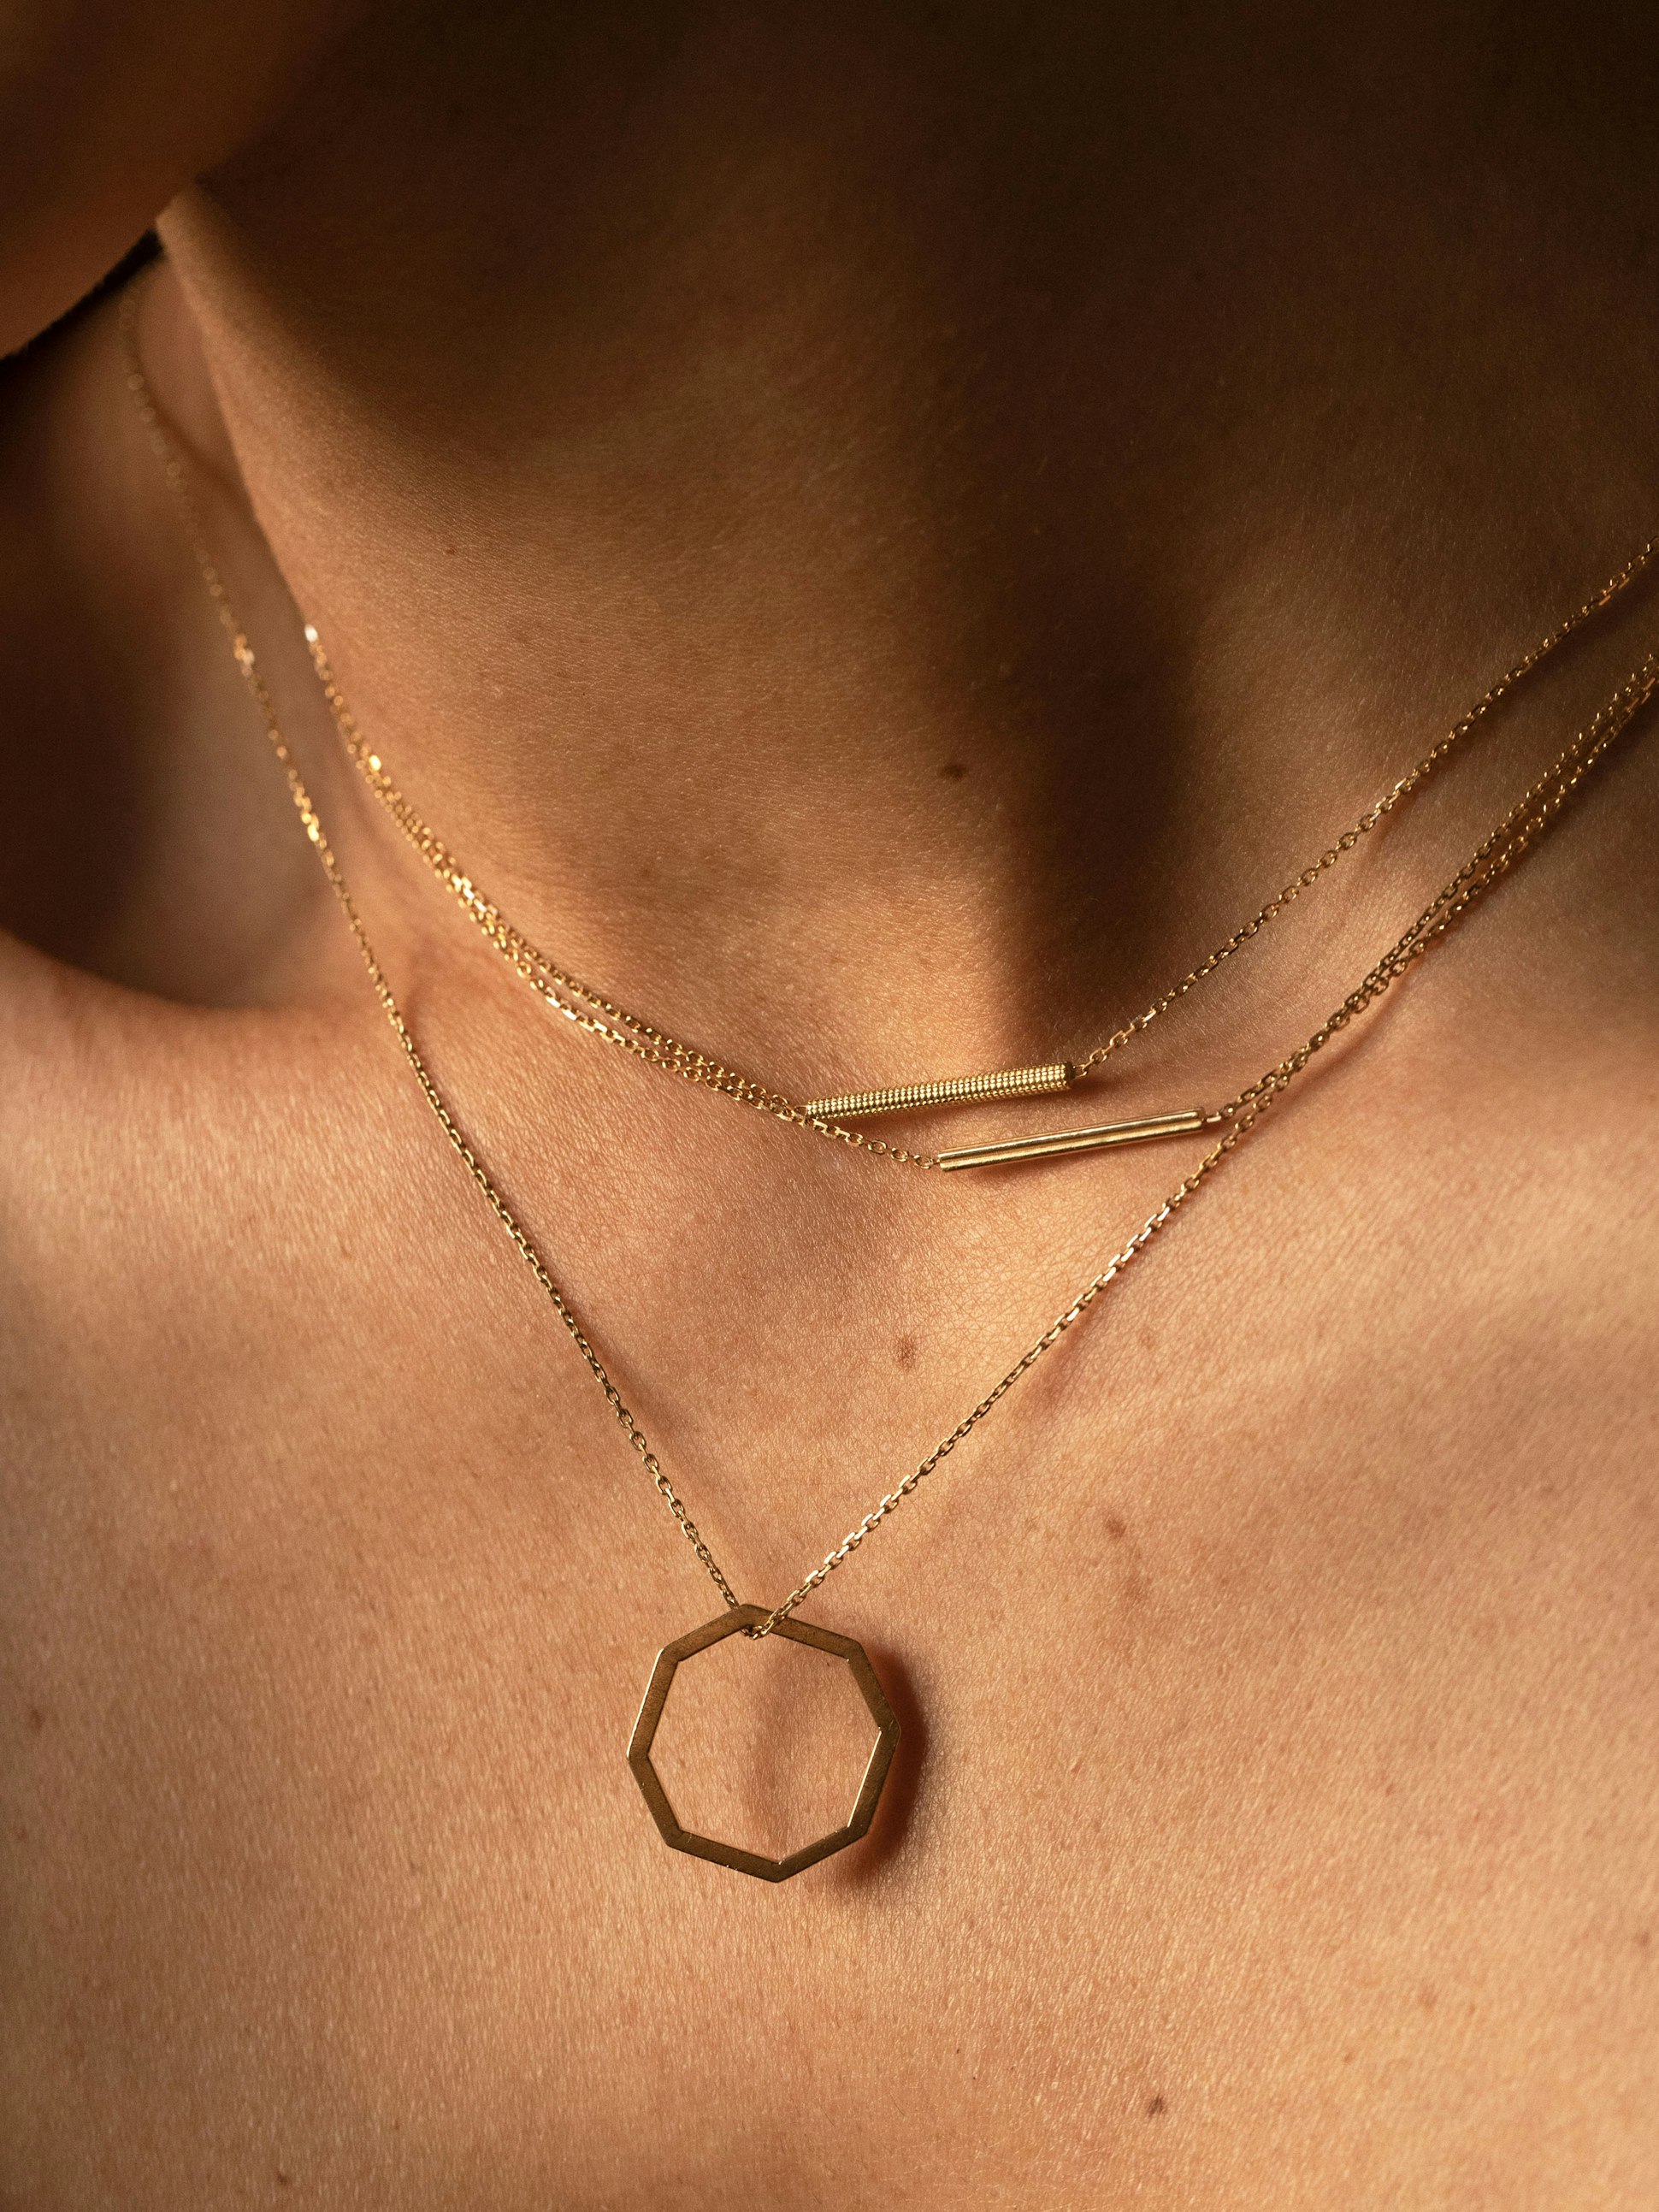 Anagramme "millegrains" necklace